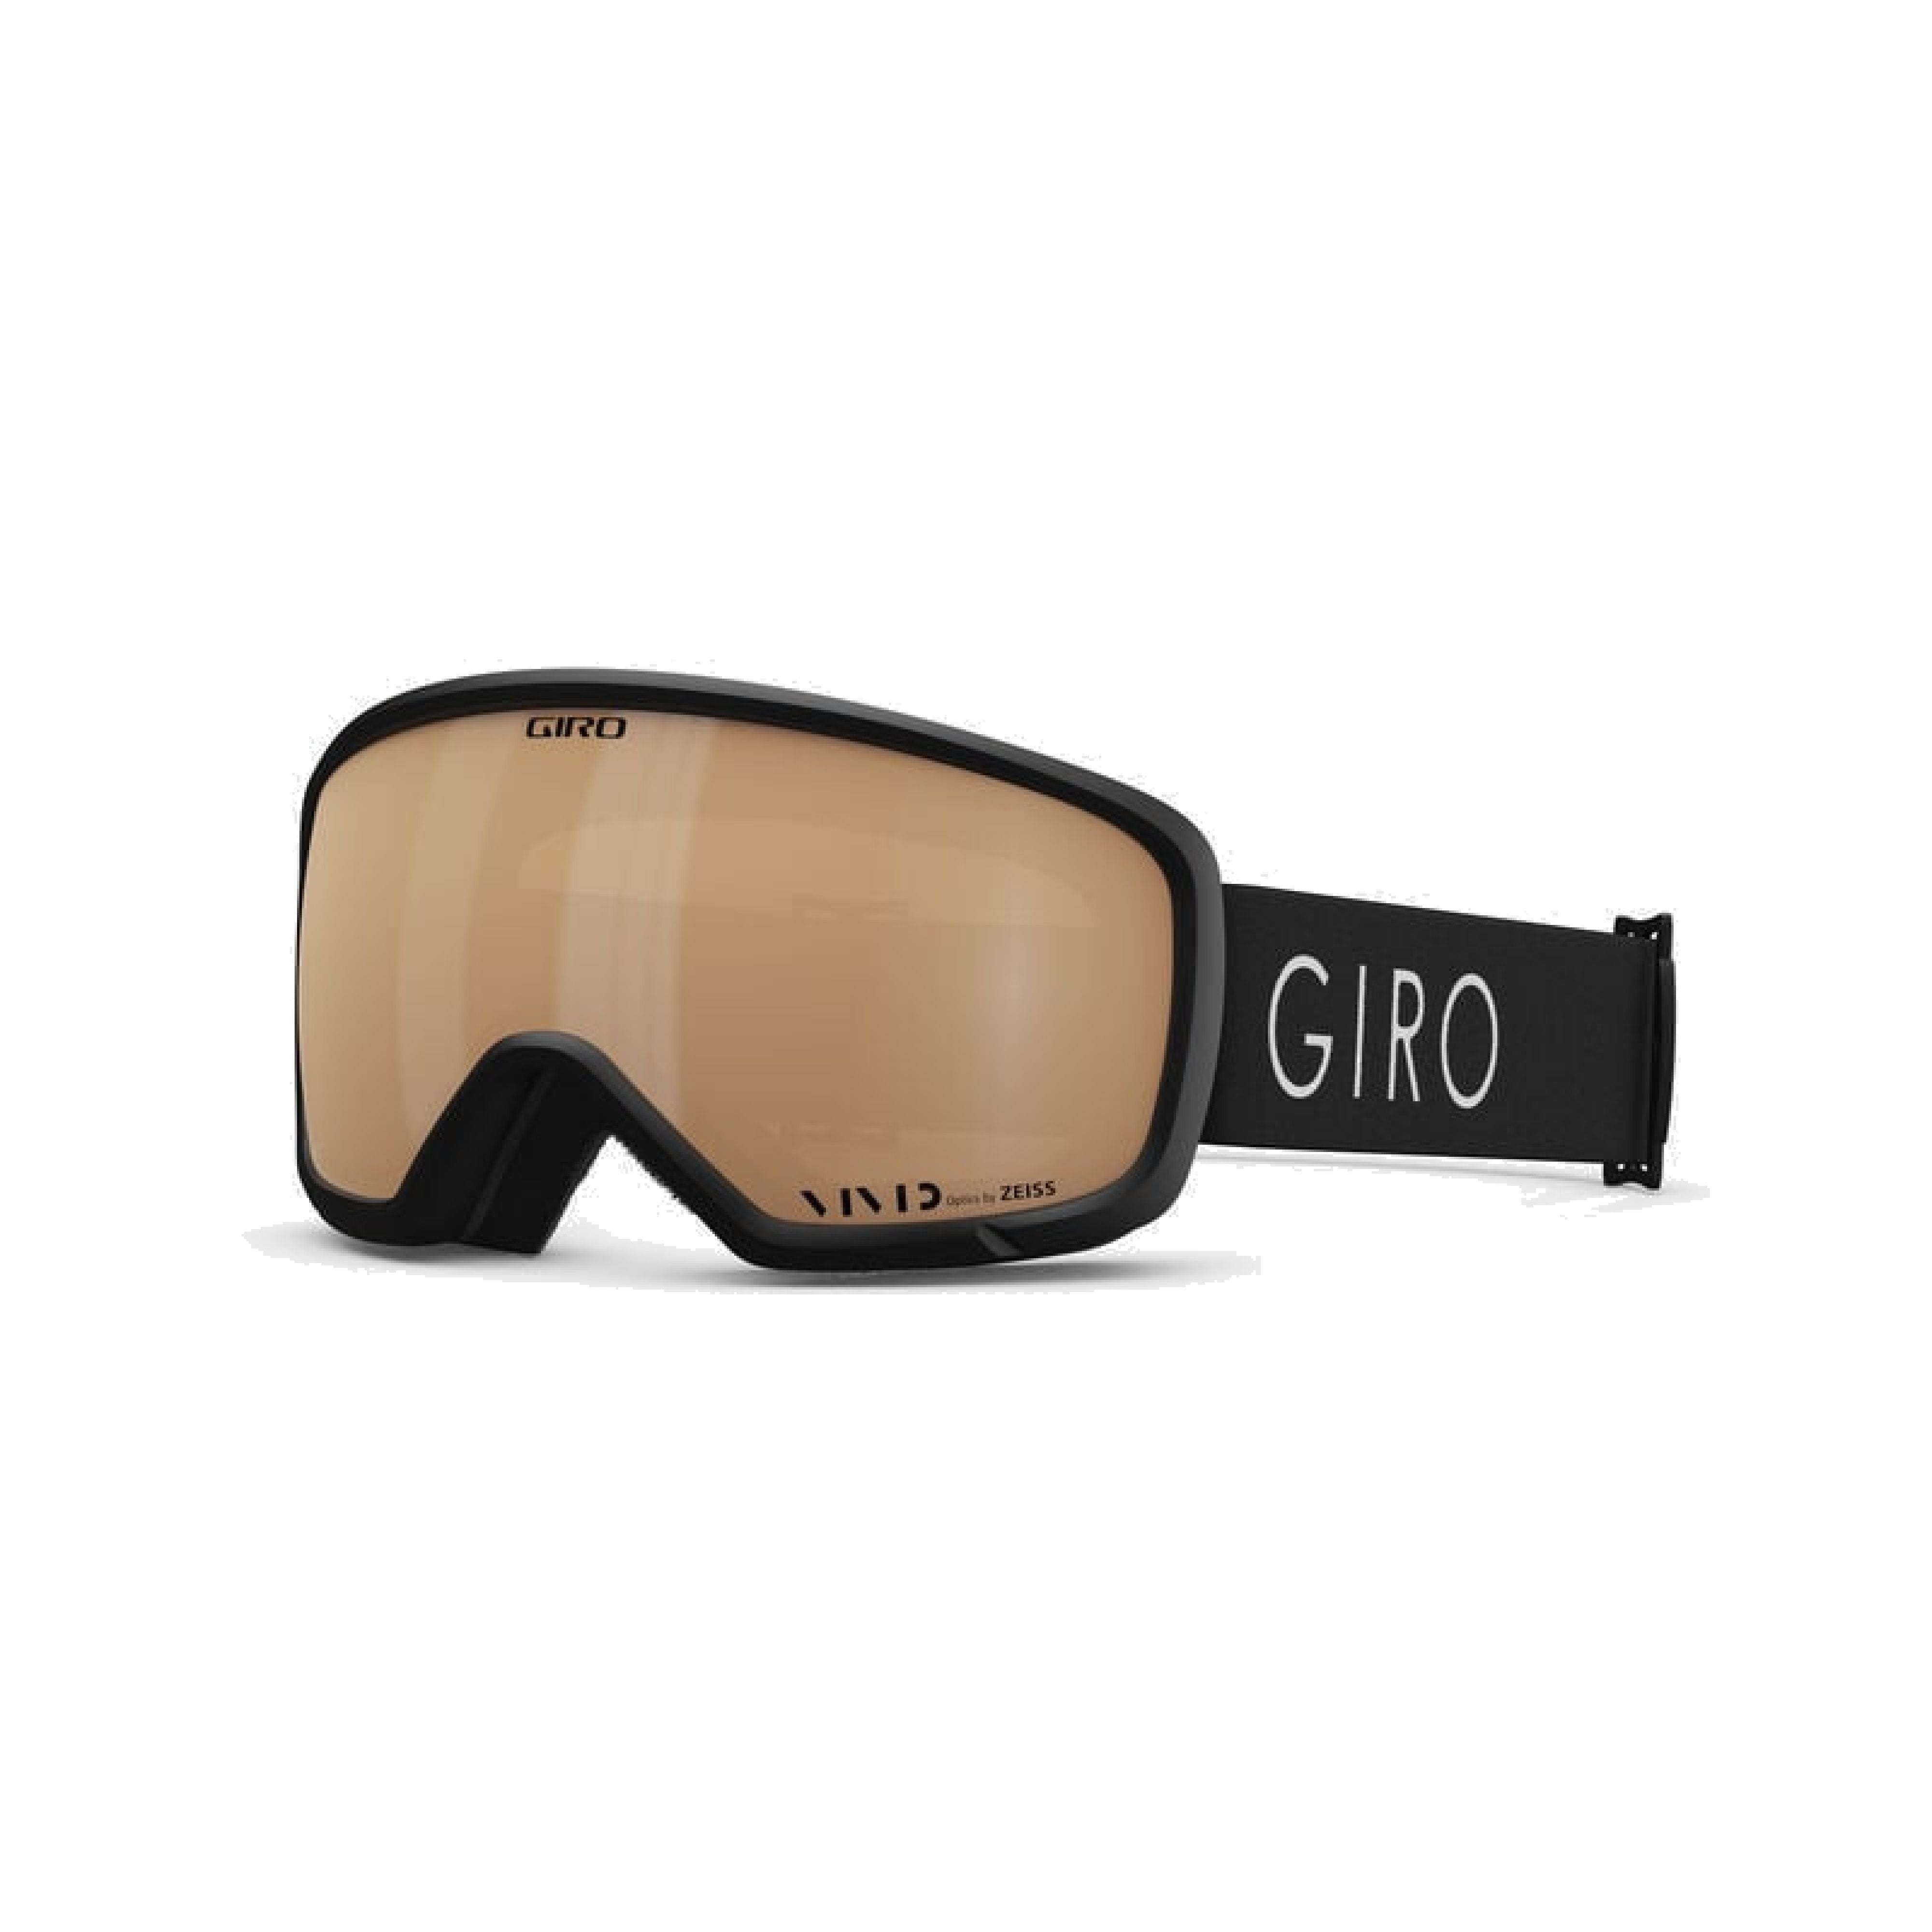 Giro Balance Adult Snow Goggle - Black Techline Strap with Vivid